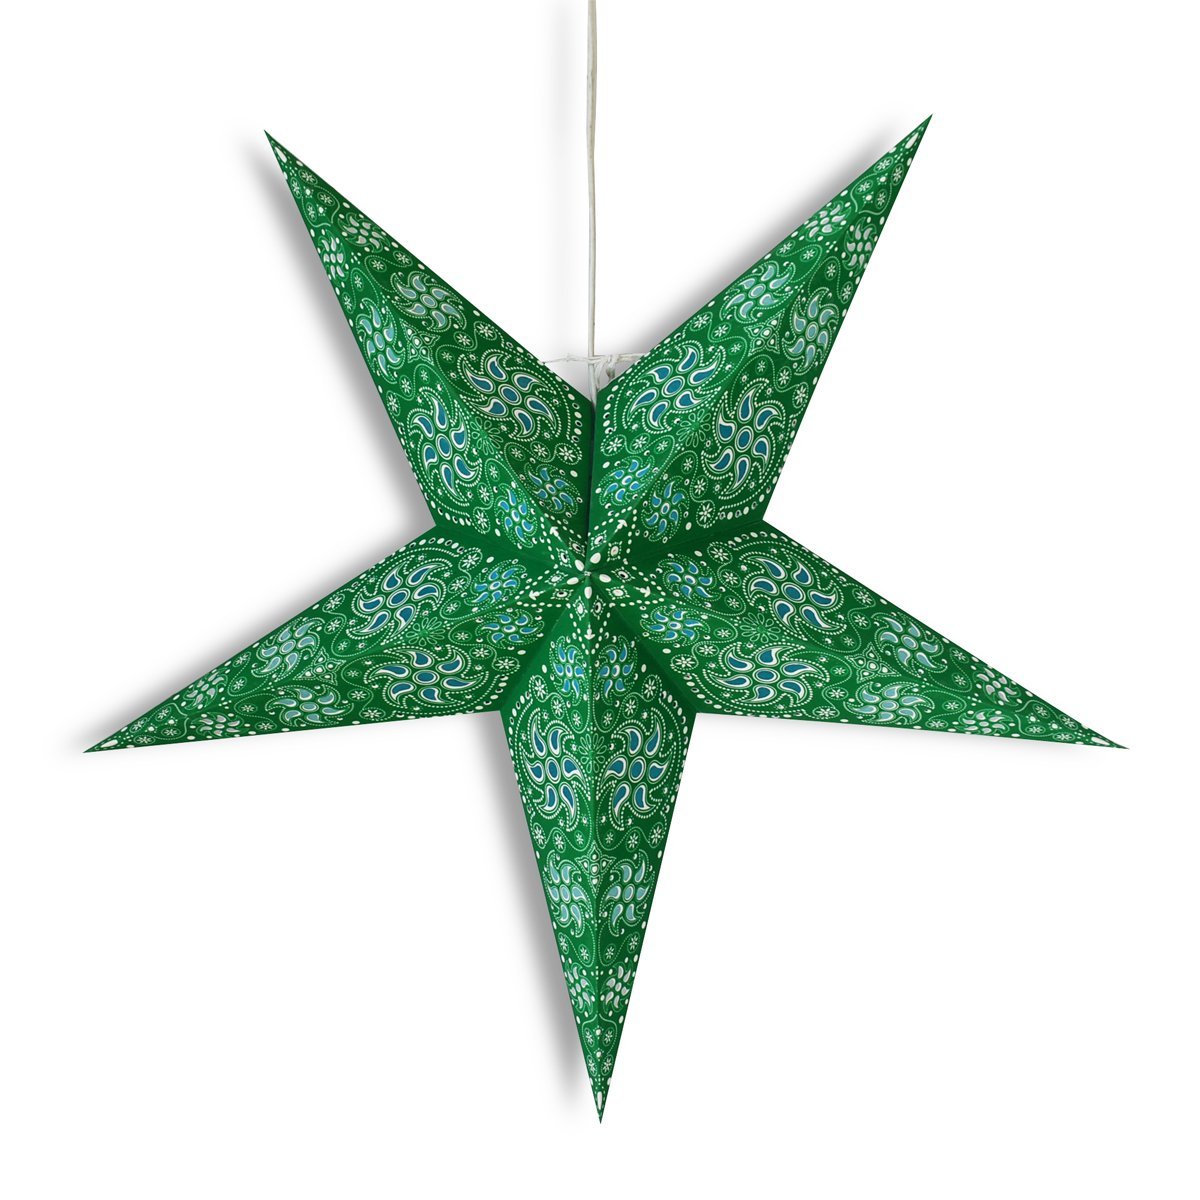 24" Green Winds Paper Star Lantern, Hanging Wedding & Party Decoration - PaperLanternStore.com - Paper Lanterns, Decor, Party Lights & More